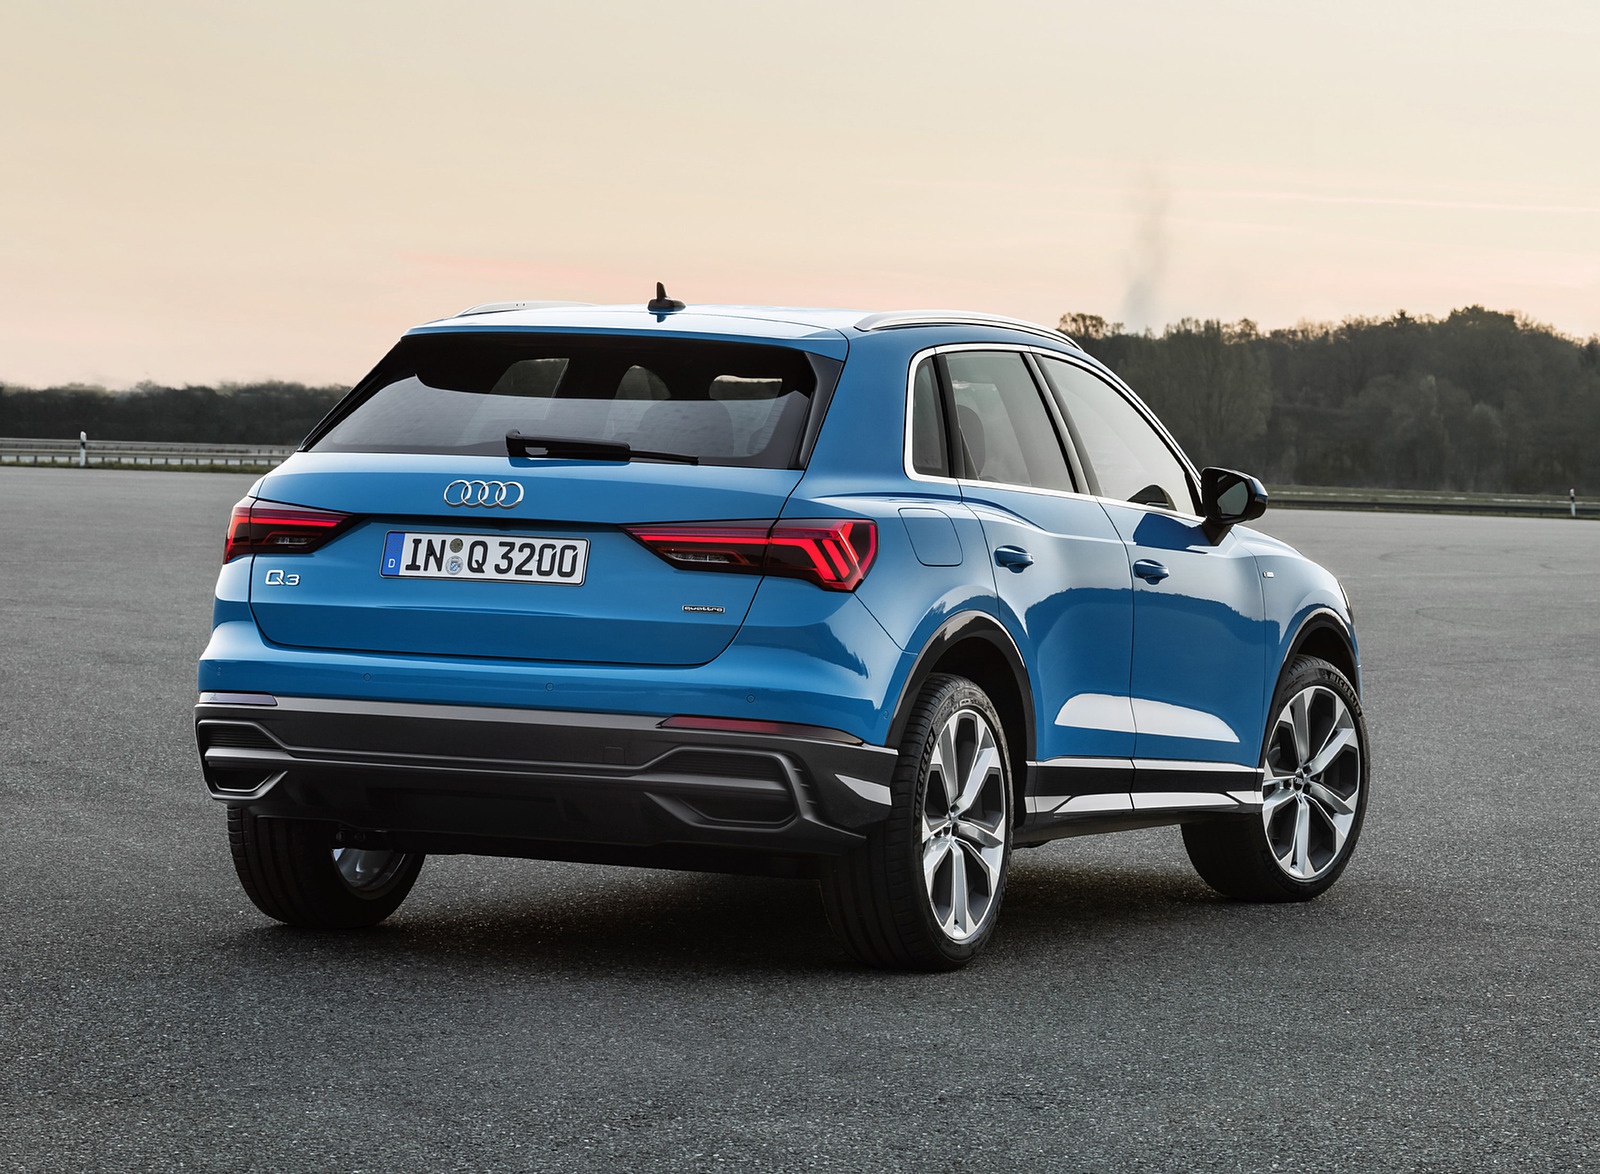 2019 Audi Q3 (Color: Turbo Blue) Rear Three-Quarter Wallpapers #18 of 40